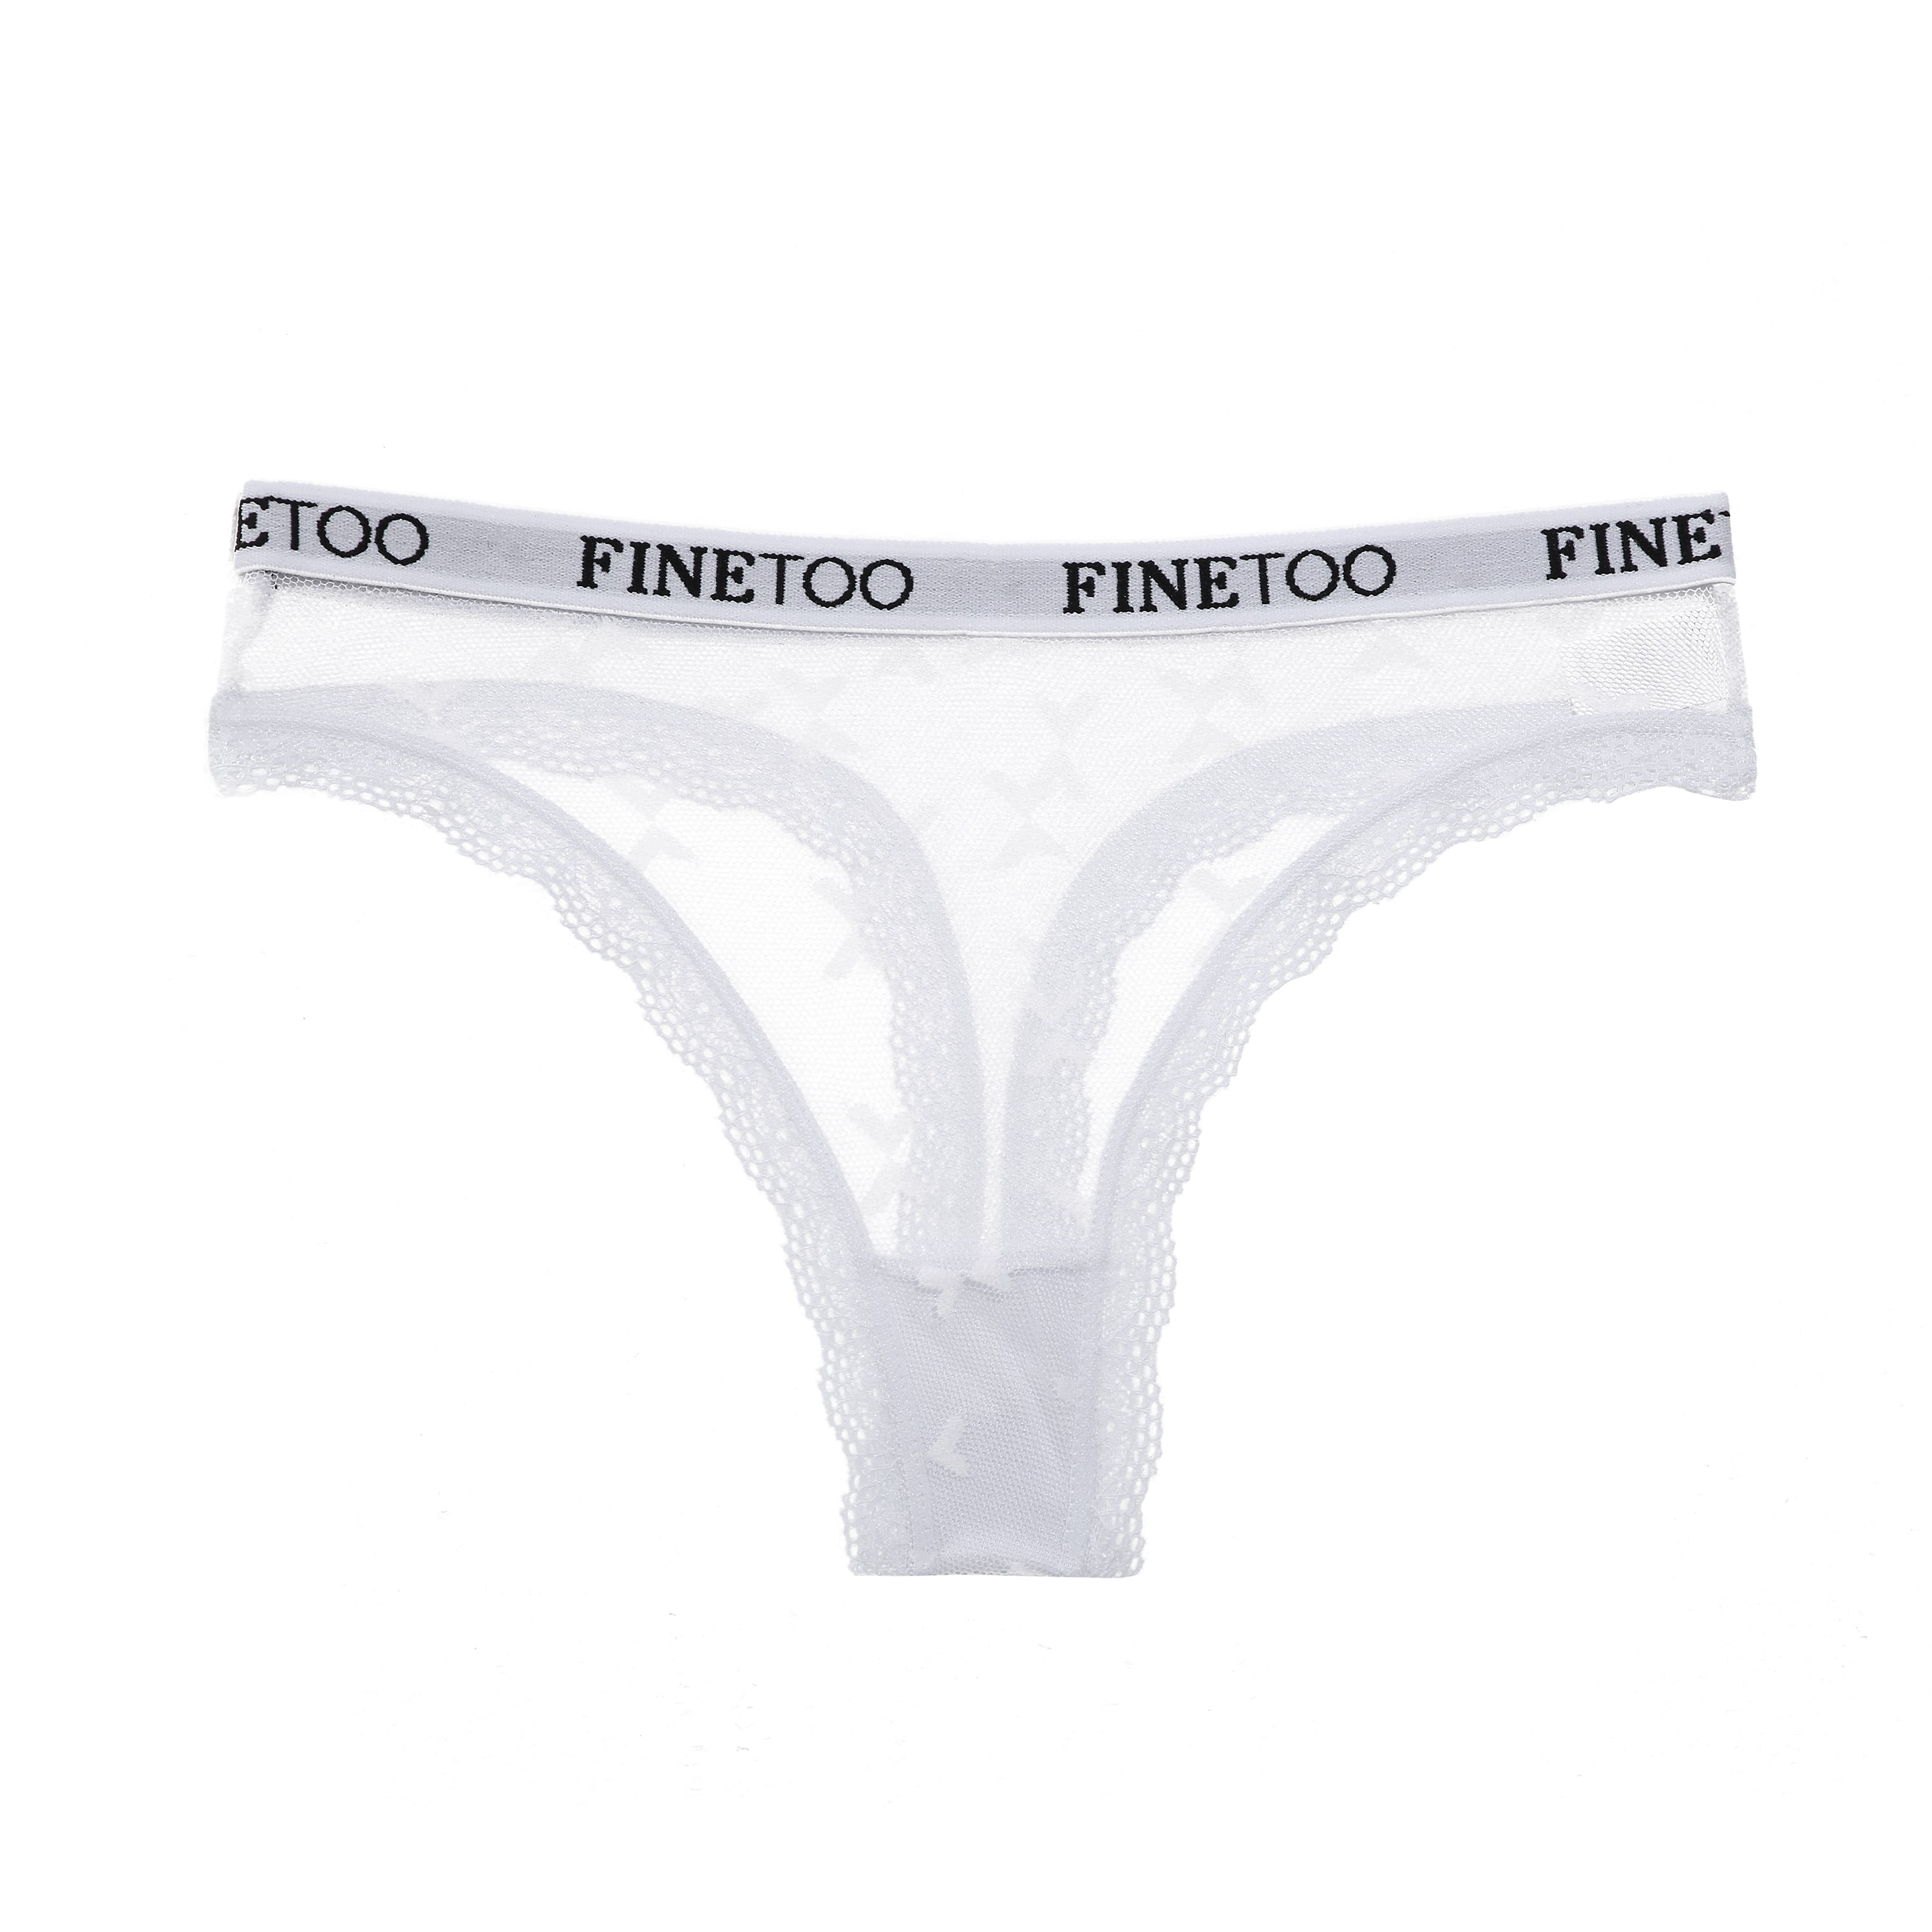 FINETOO Brazilian Cotton Seamless Cotton Panties Set, Sizes M 2XL